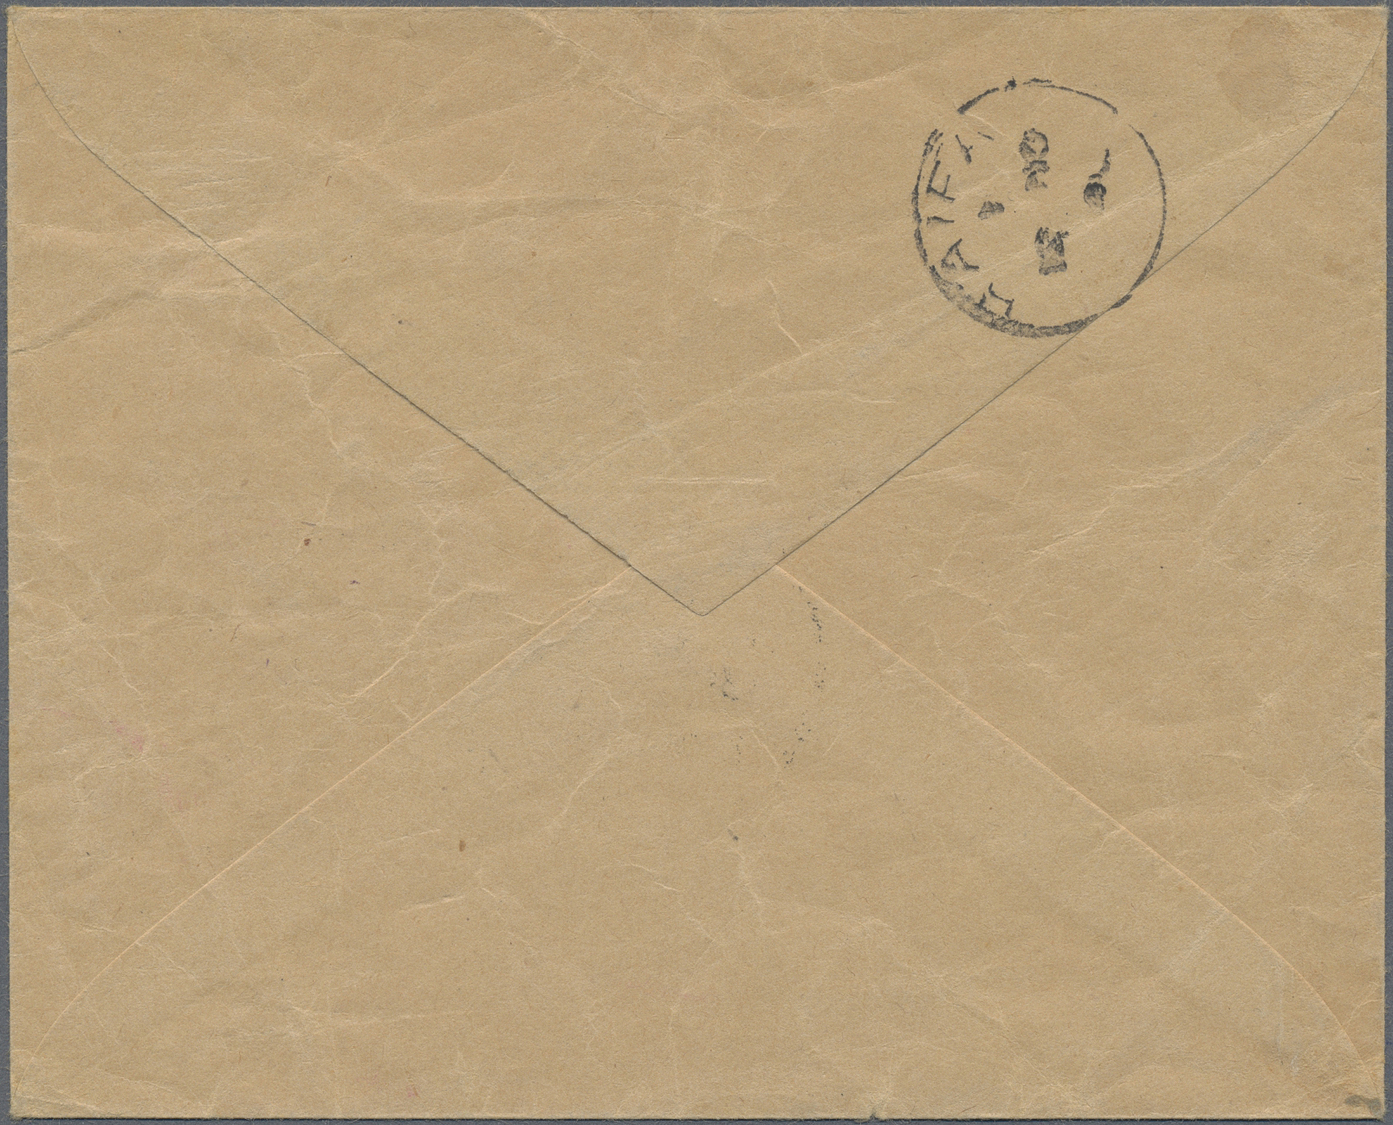 Br Jordanien: 1941, Offical Cover With Imprint "Imarat Sharki Al Urdun" Used Stampless With All Arabic Negative Seal Of - Jordanie